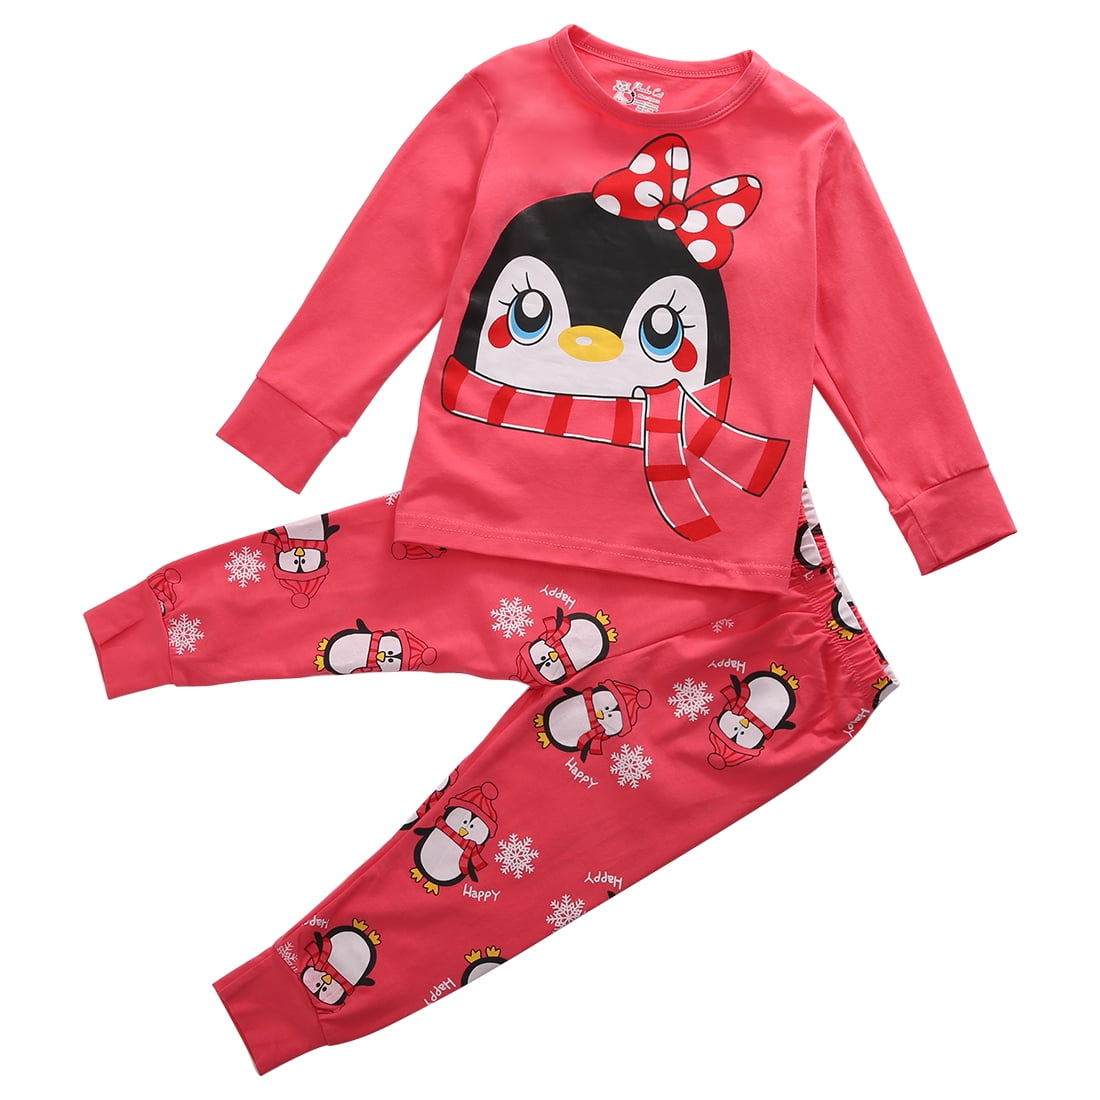 Details about   Girl Pajamas Clothes Suit Children Cotton Sleepwear Pink Dog Pj's Pijama 